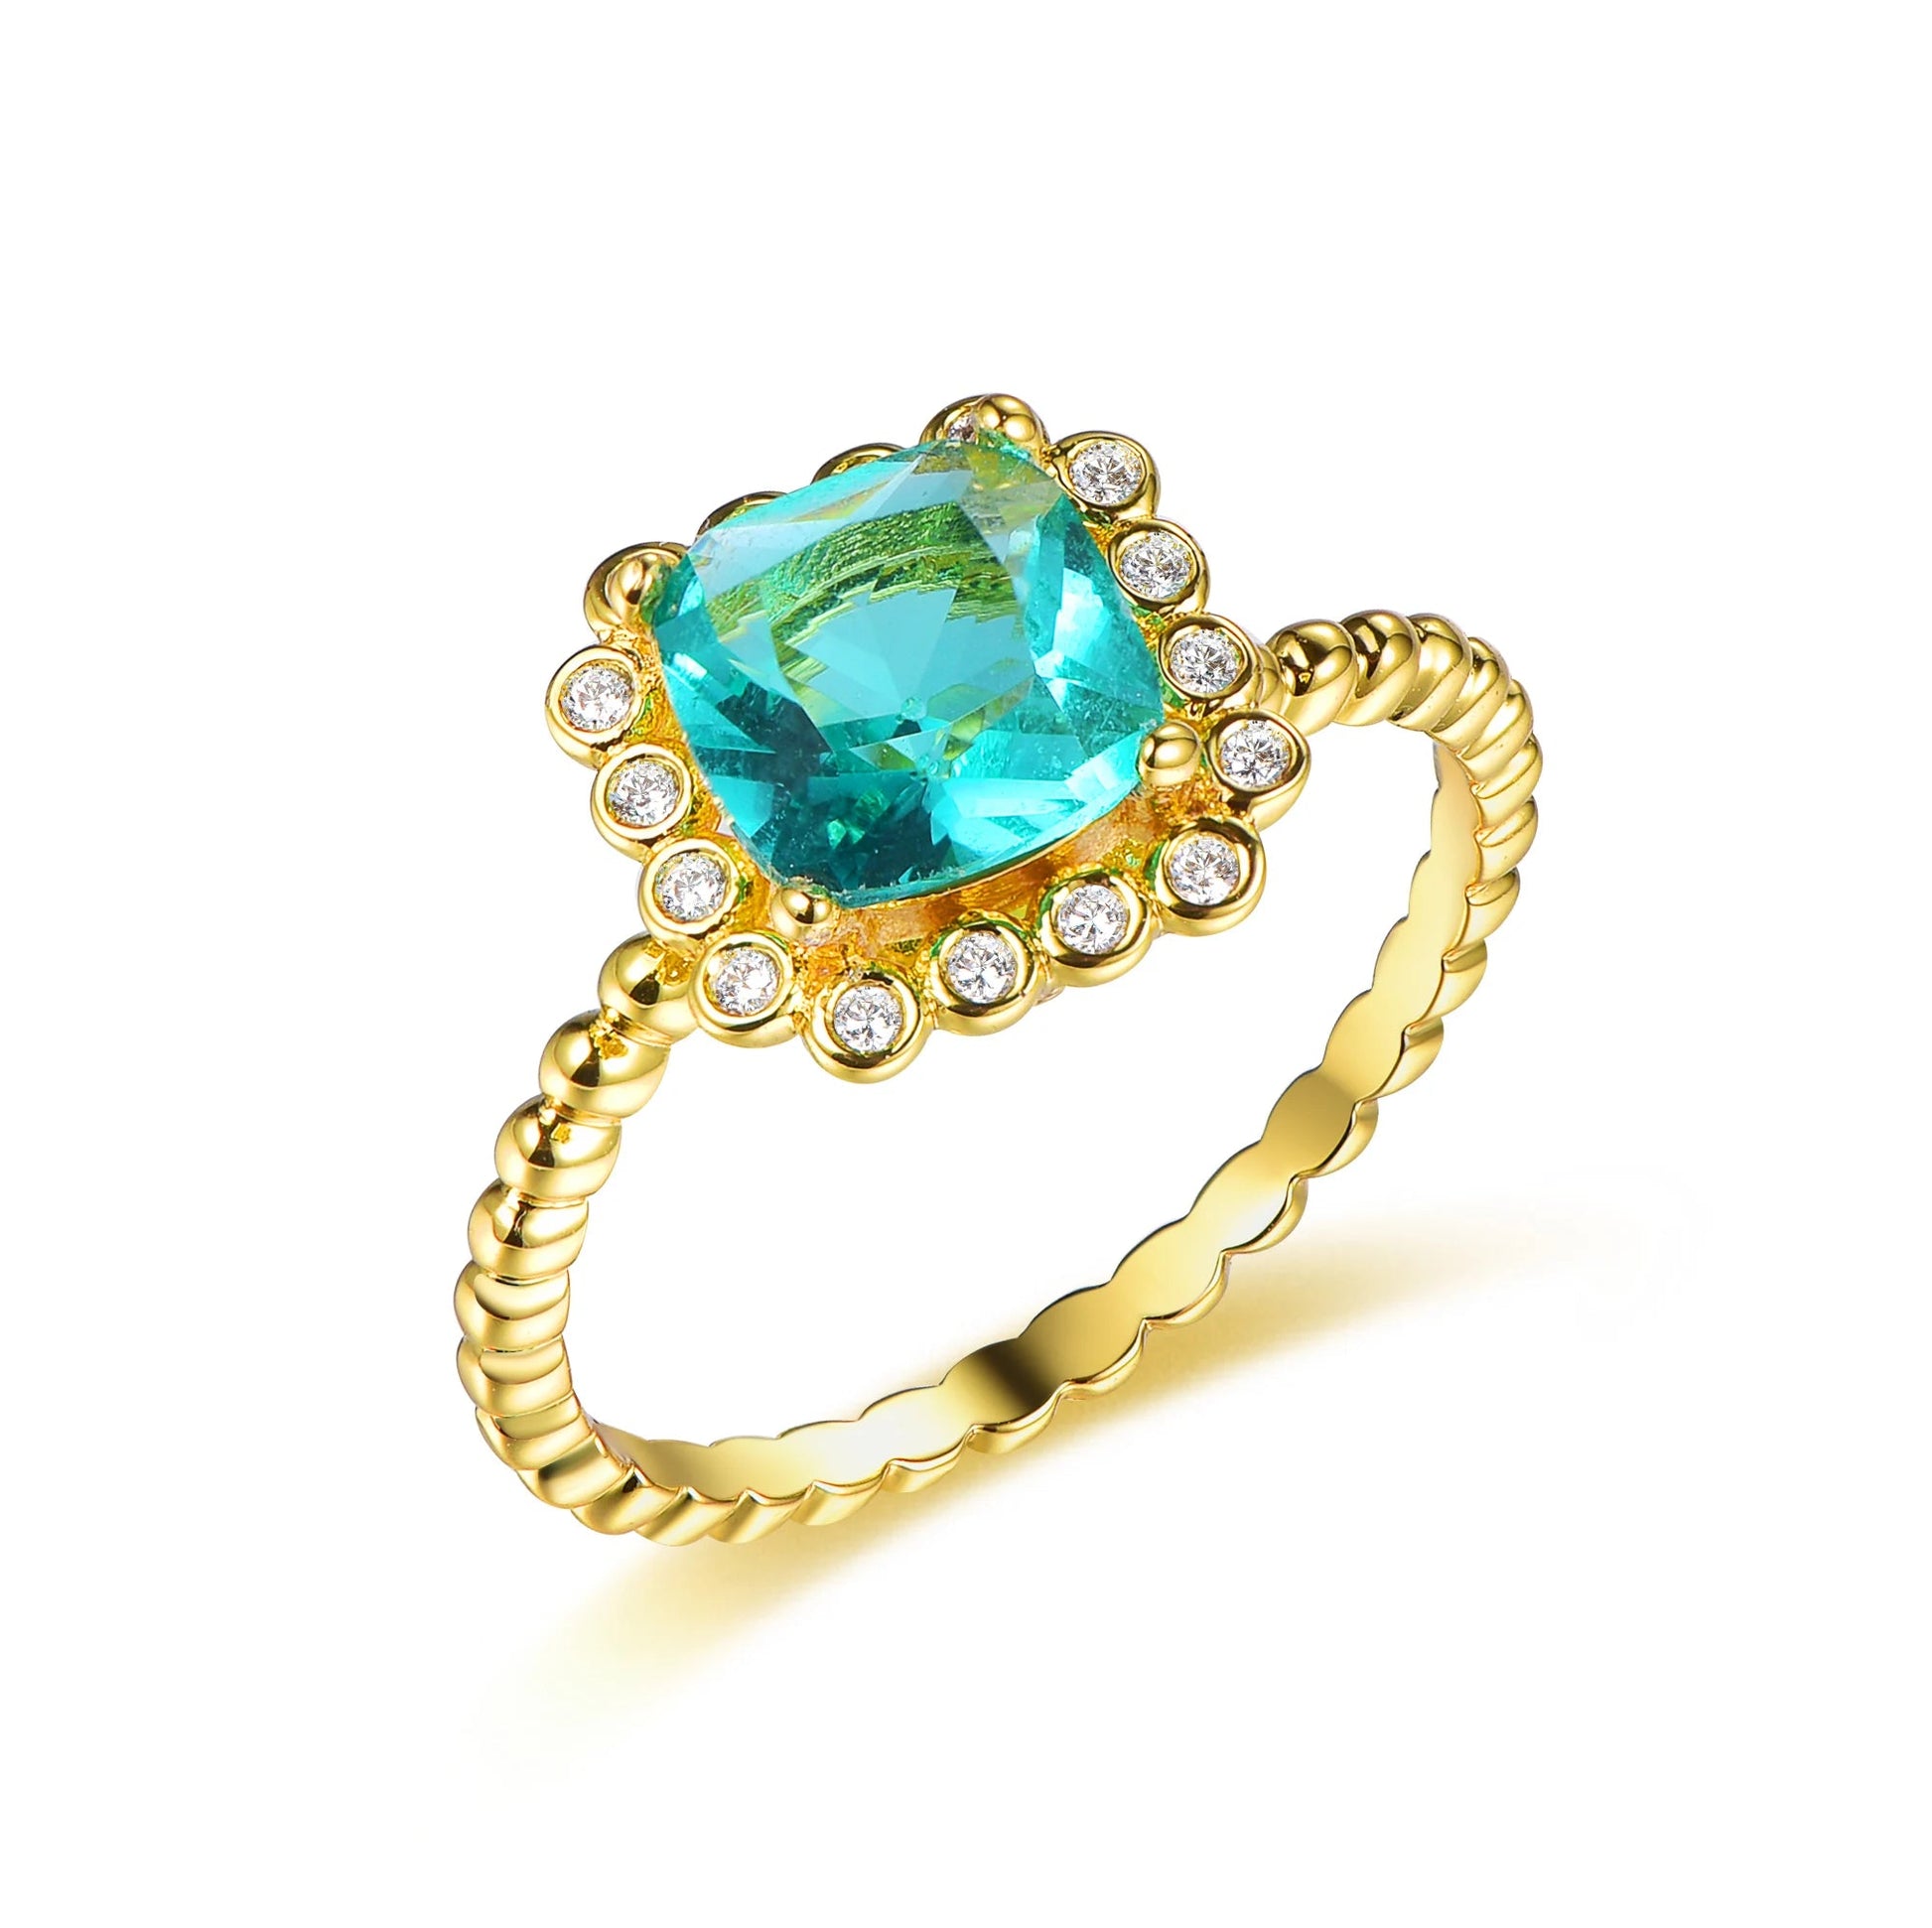 Classic Emerald Rings Women Engagement Ring Rose Gold Zircon Diamond Ring Fashion Gemstone Sapphire Fine Jewelry Kirin Jewelry